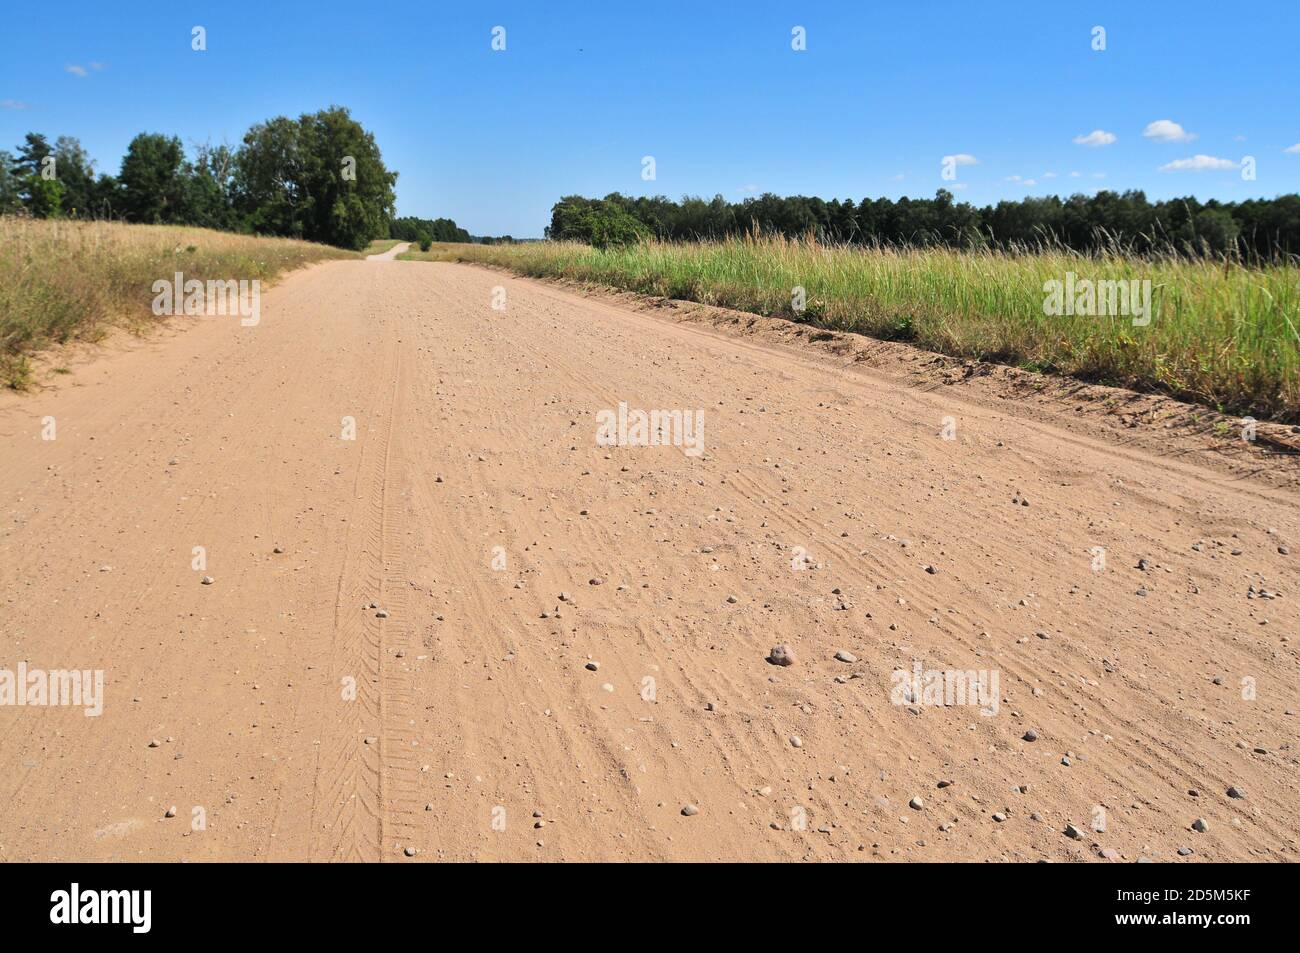 Dirt road in (Mazury) Masuria in northeastern Poland Stock Photo